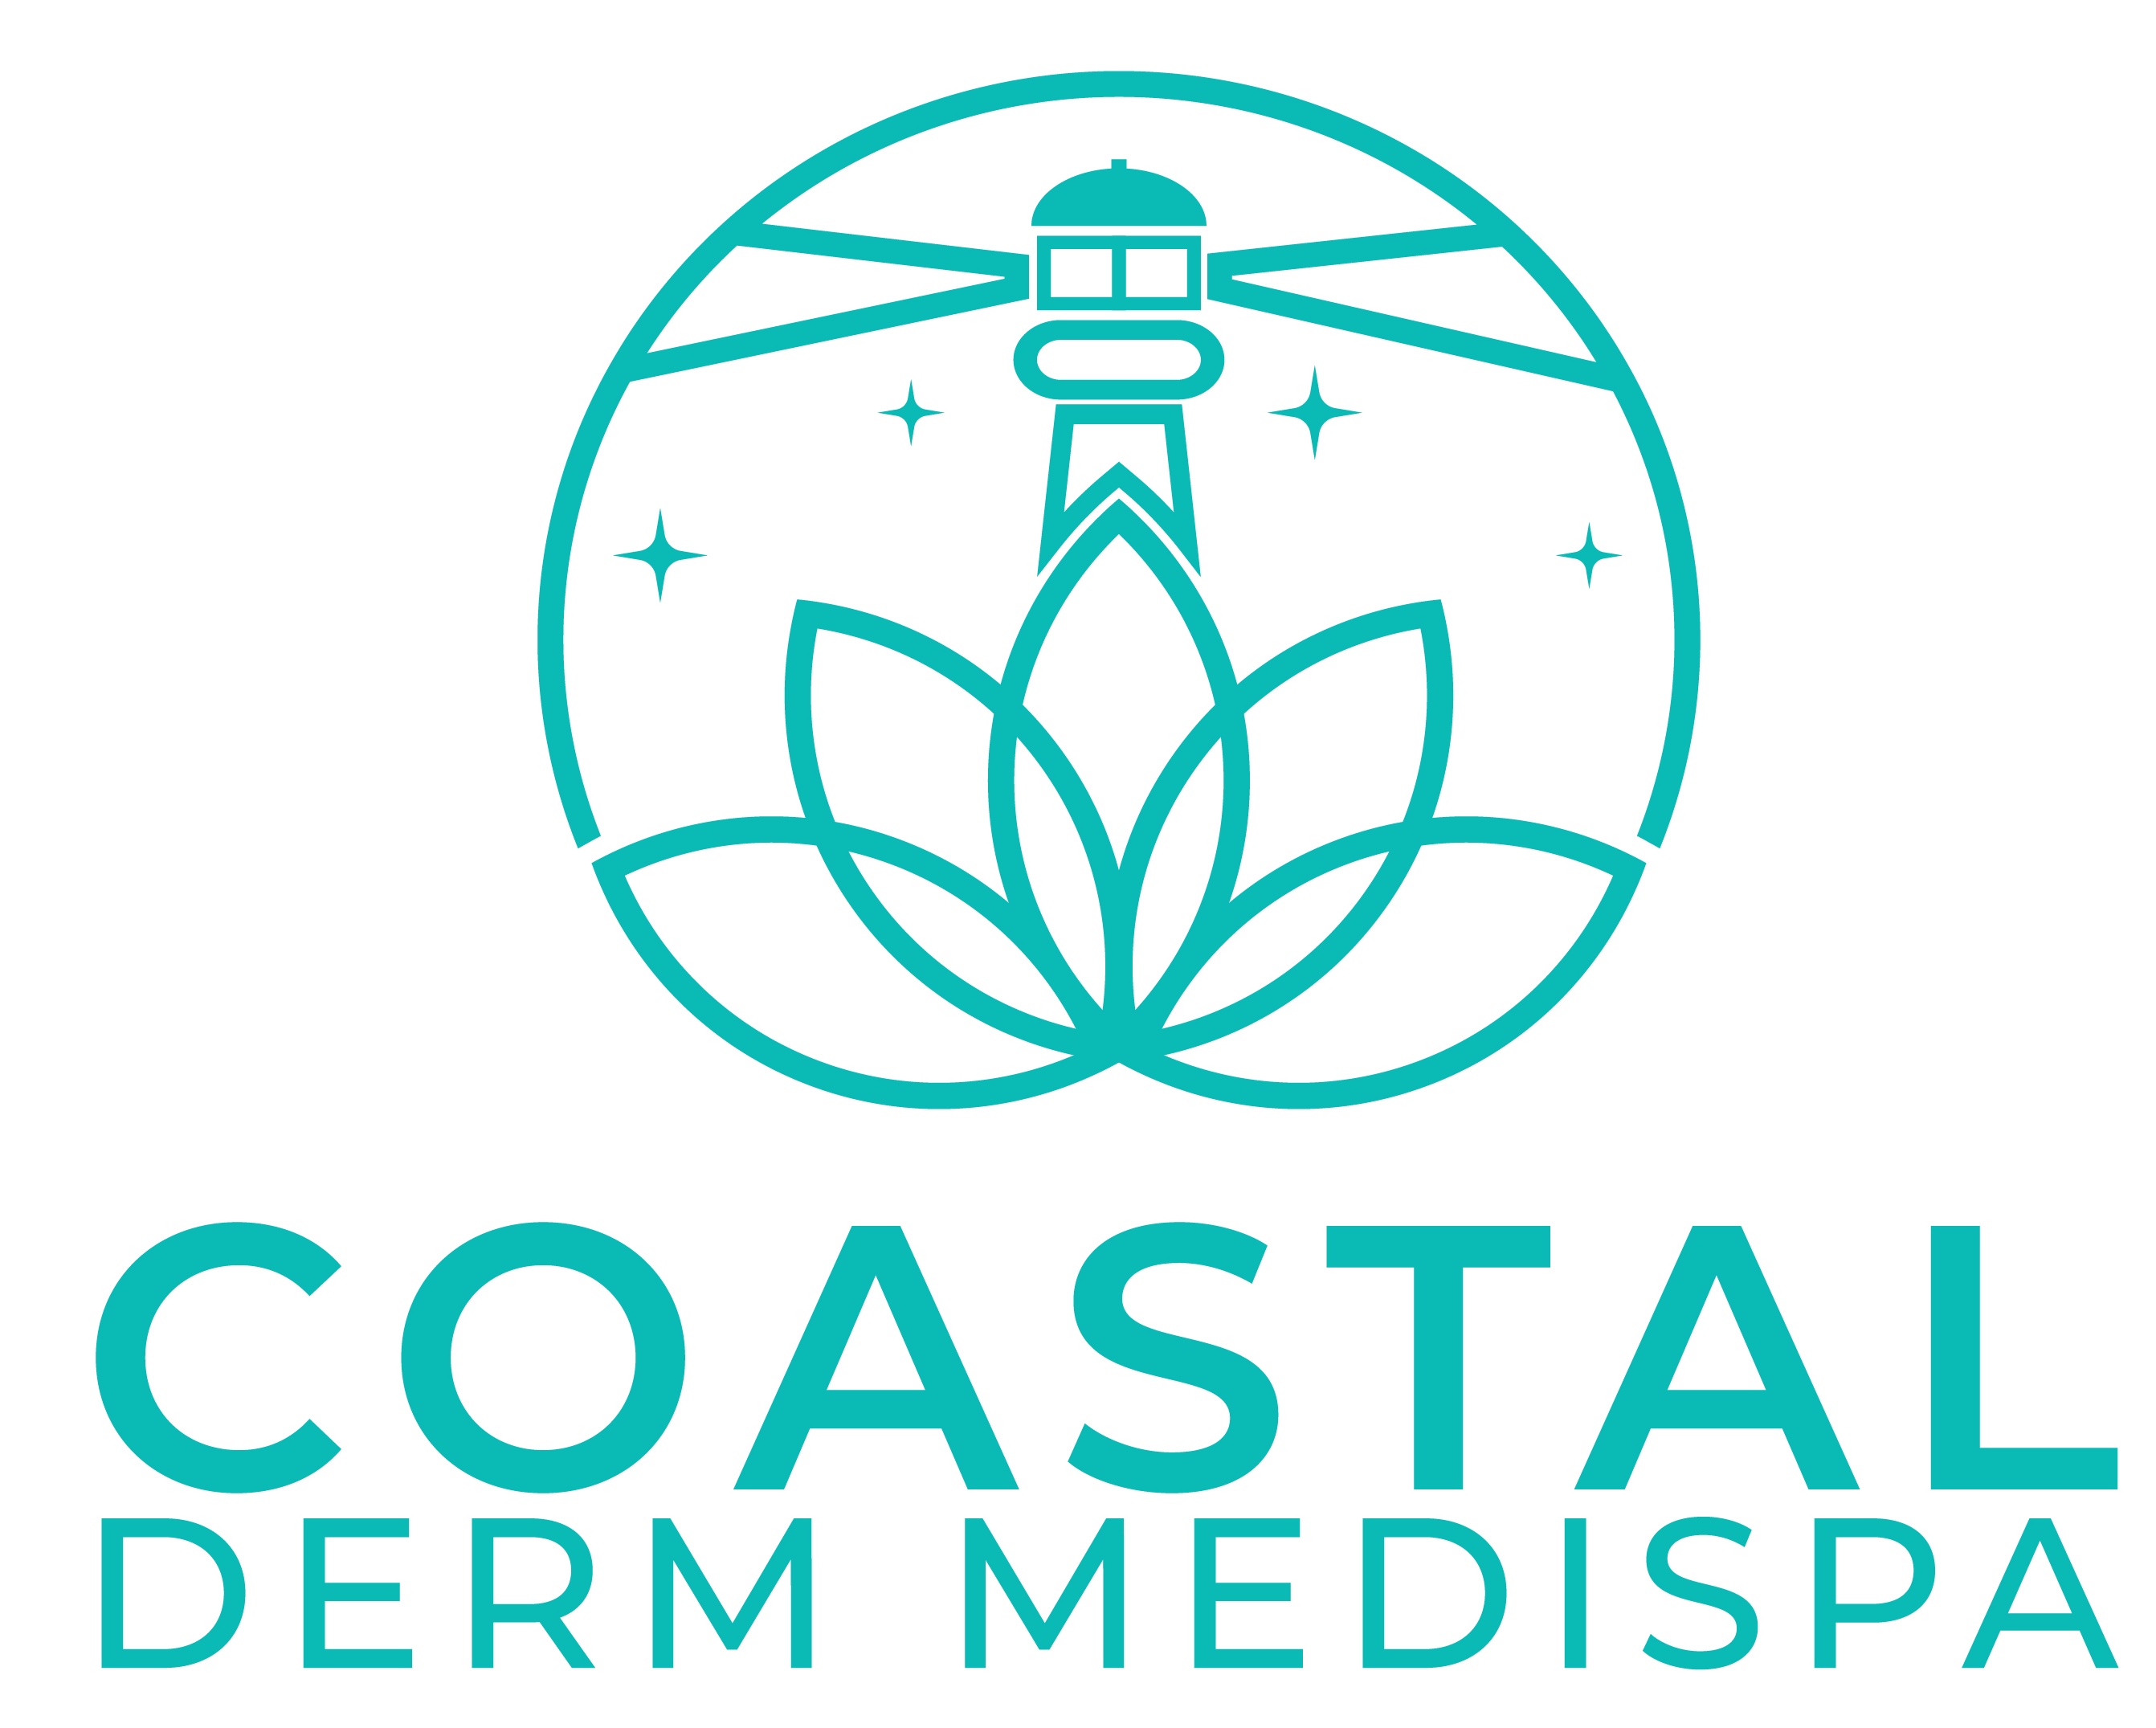 Coastal Derm Medispa logo